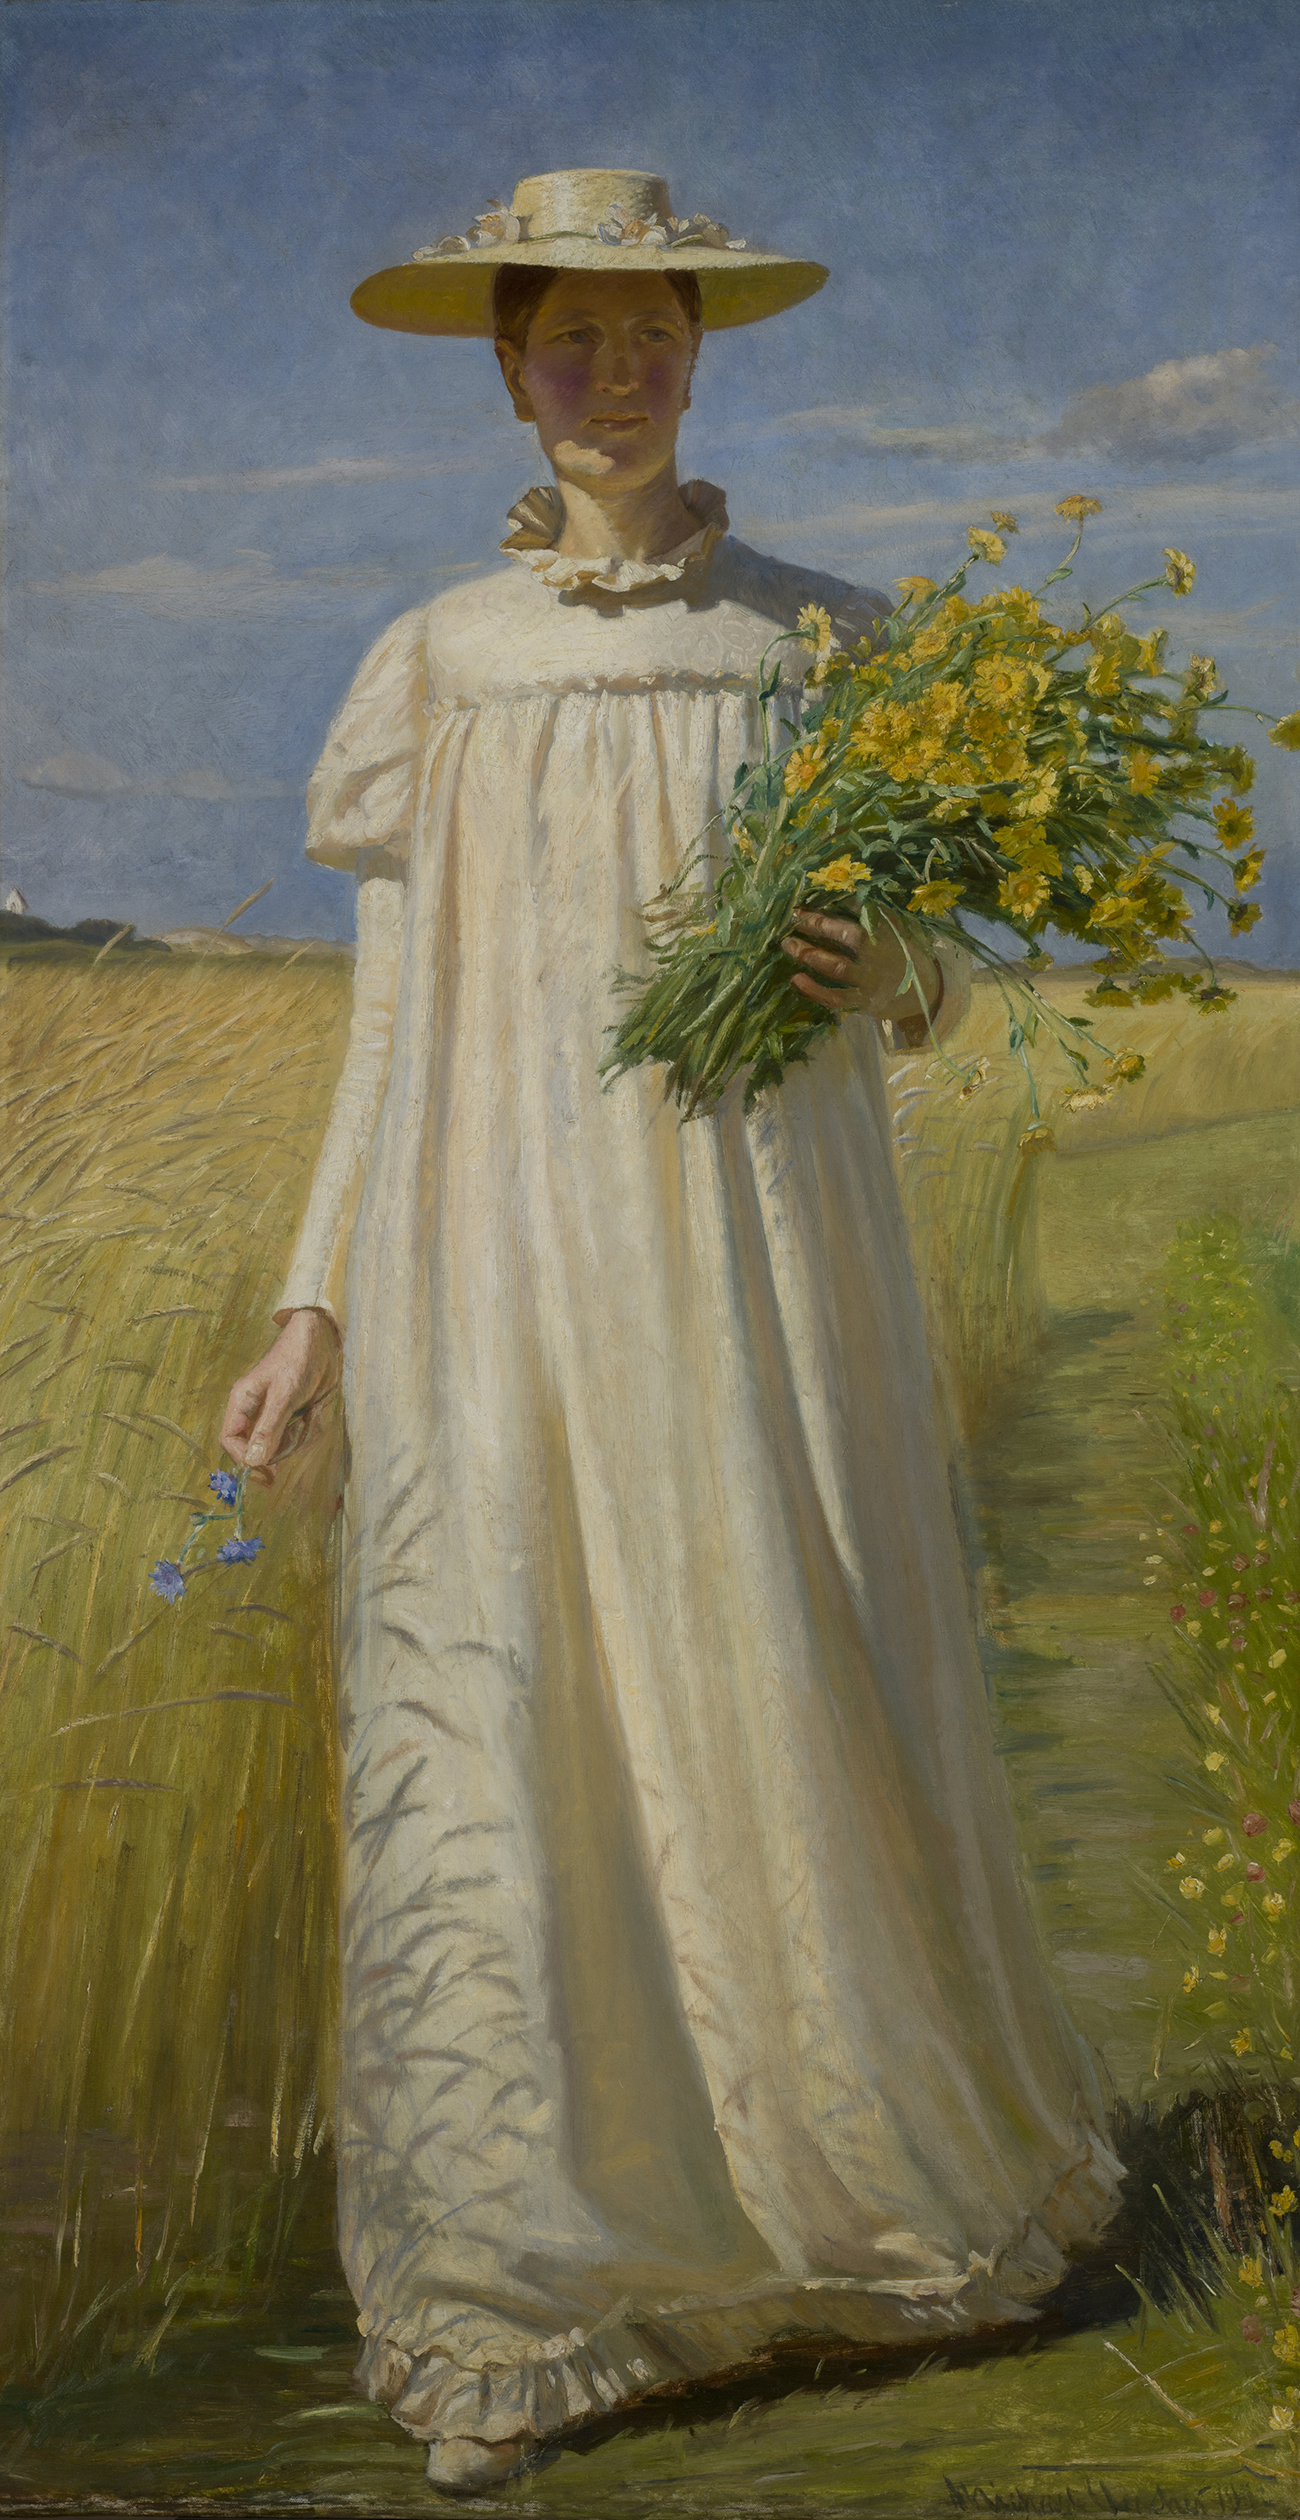 Anna Ancher se Întoarce de pe Câmp by Michael Ancher - 1902 - 64 x 55 cm 